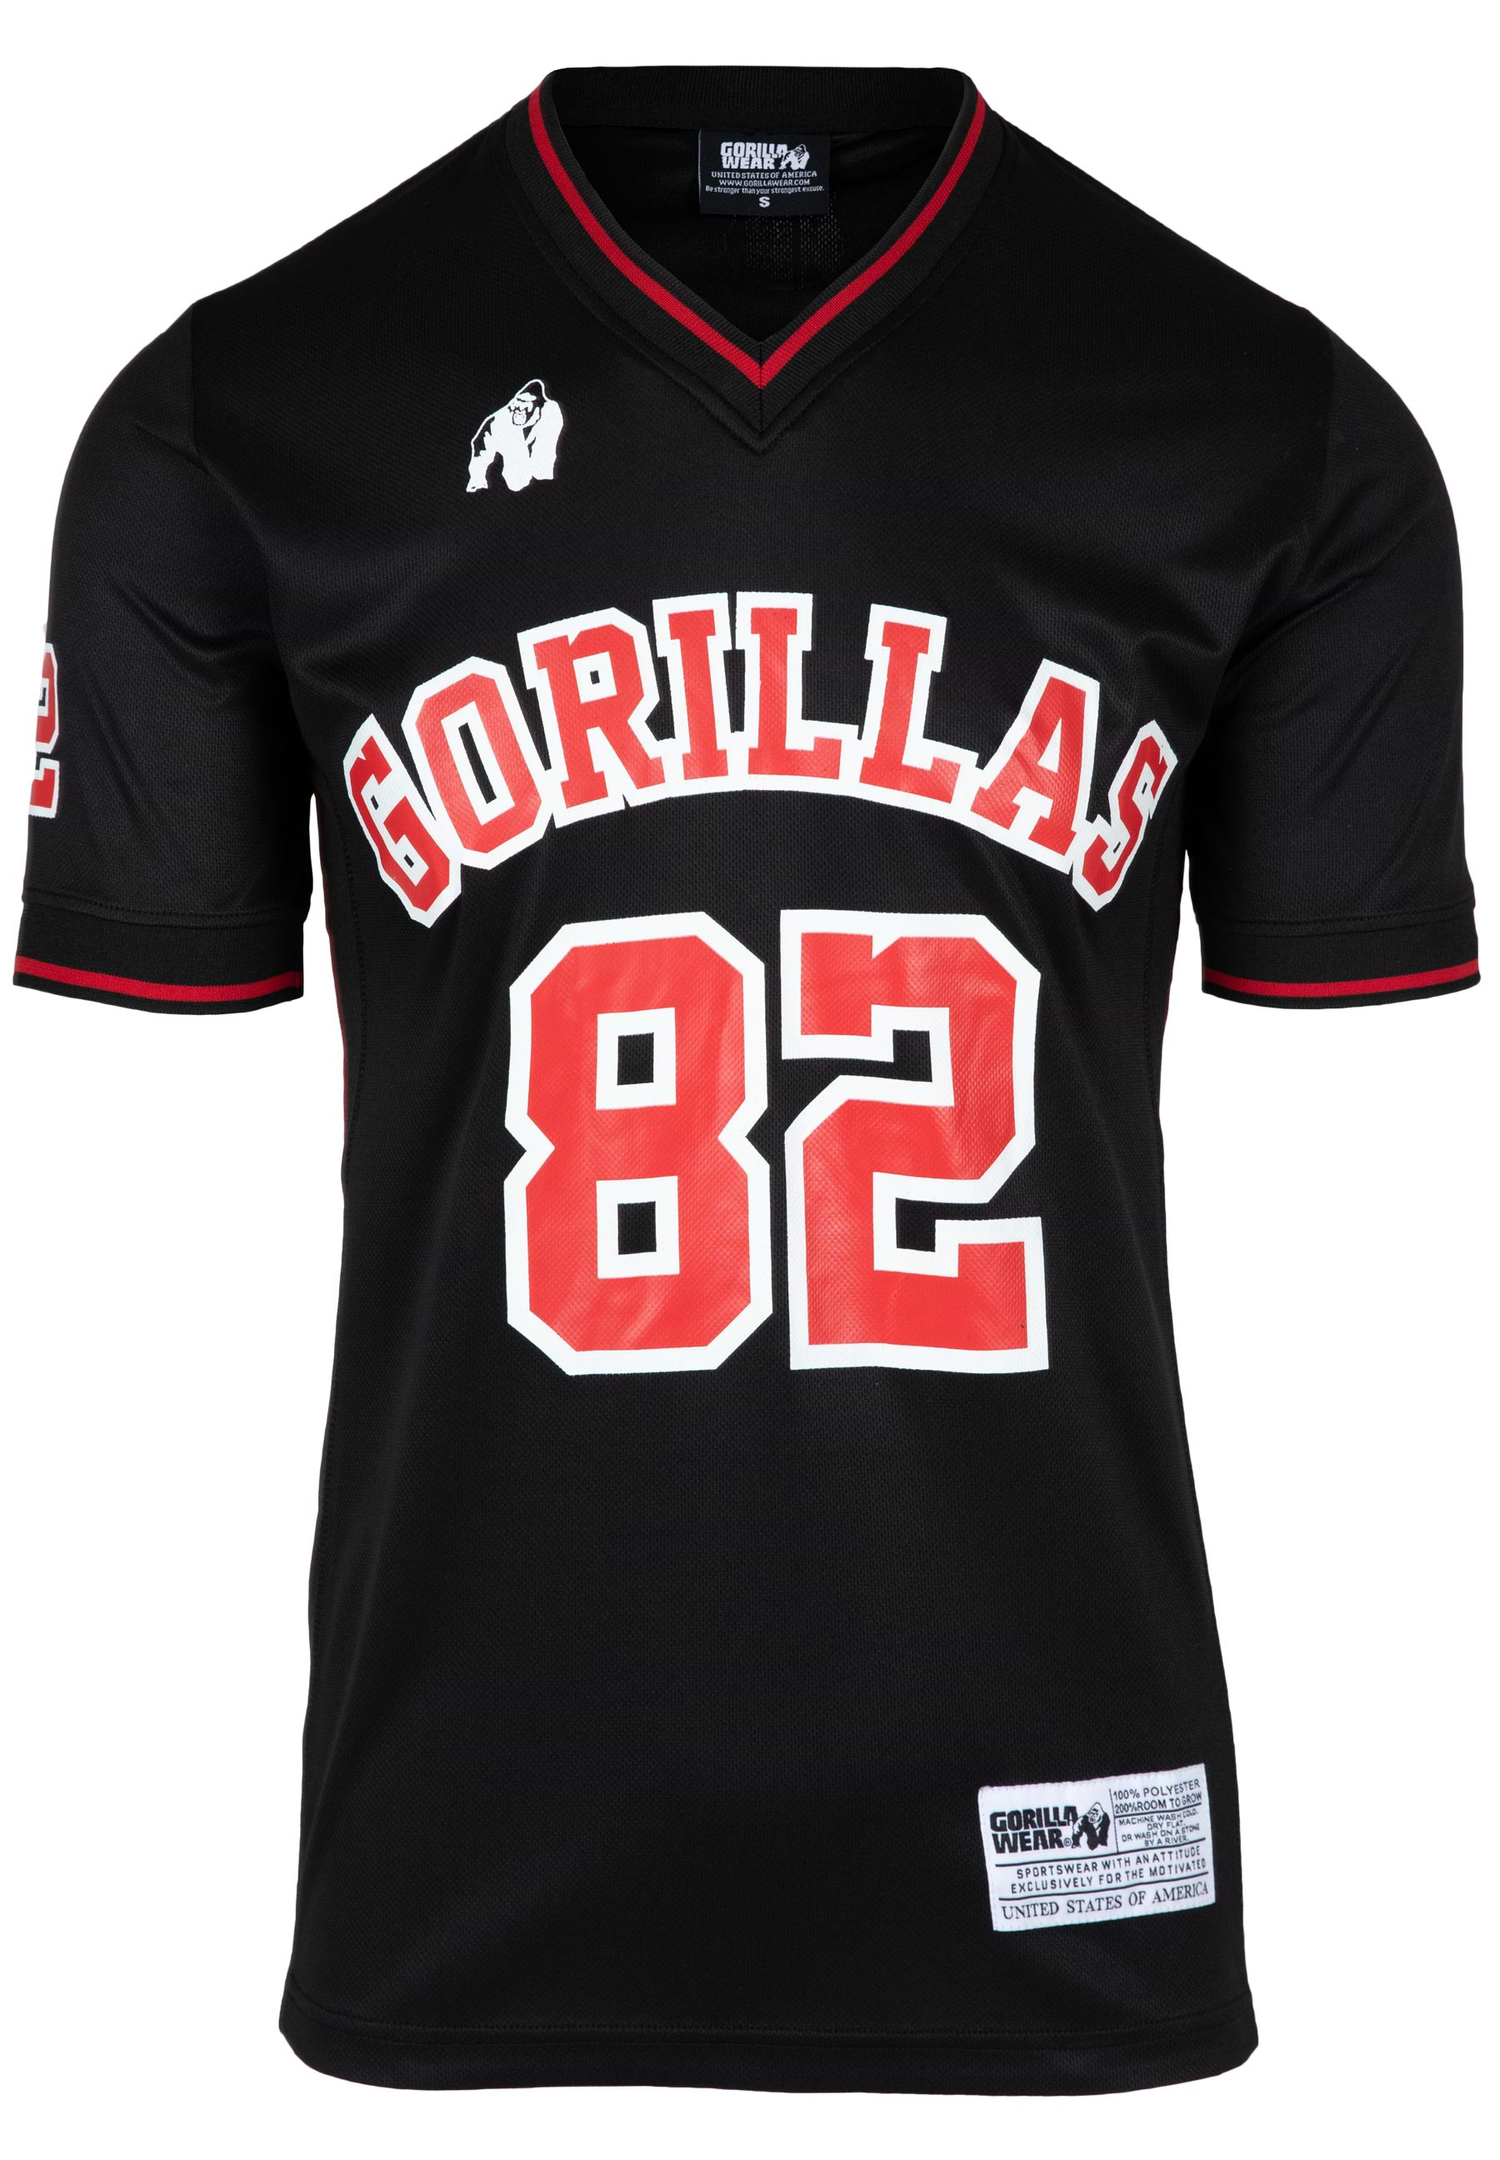 82 Baseball Jersey - Black Gorilla Wear